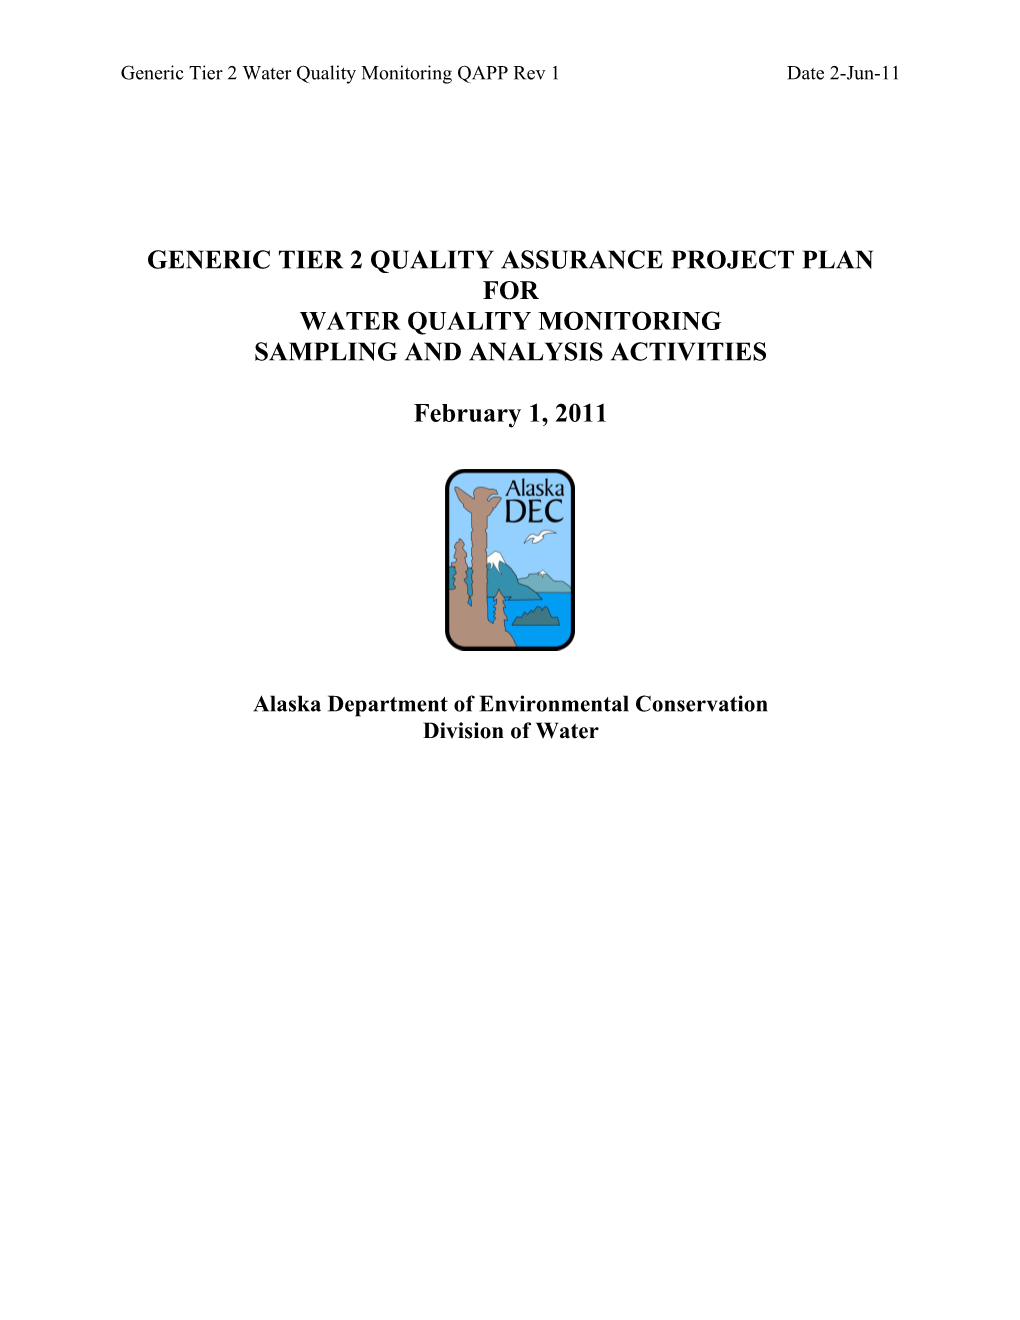 Generic Quality Assurance Project Plan (QAPP)